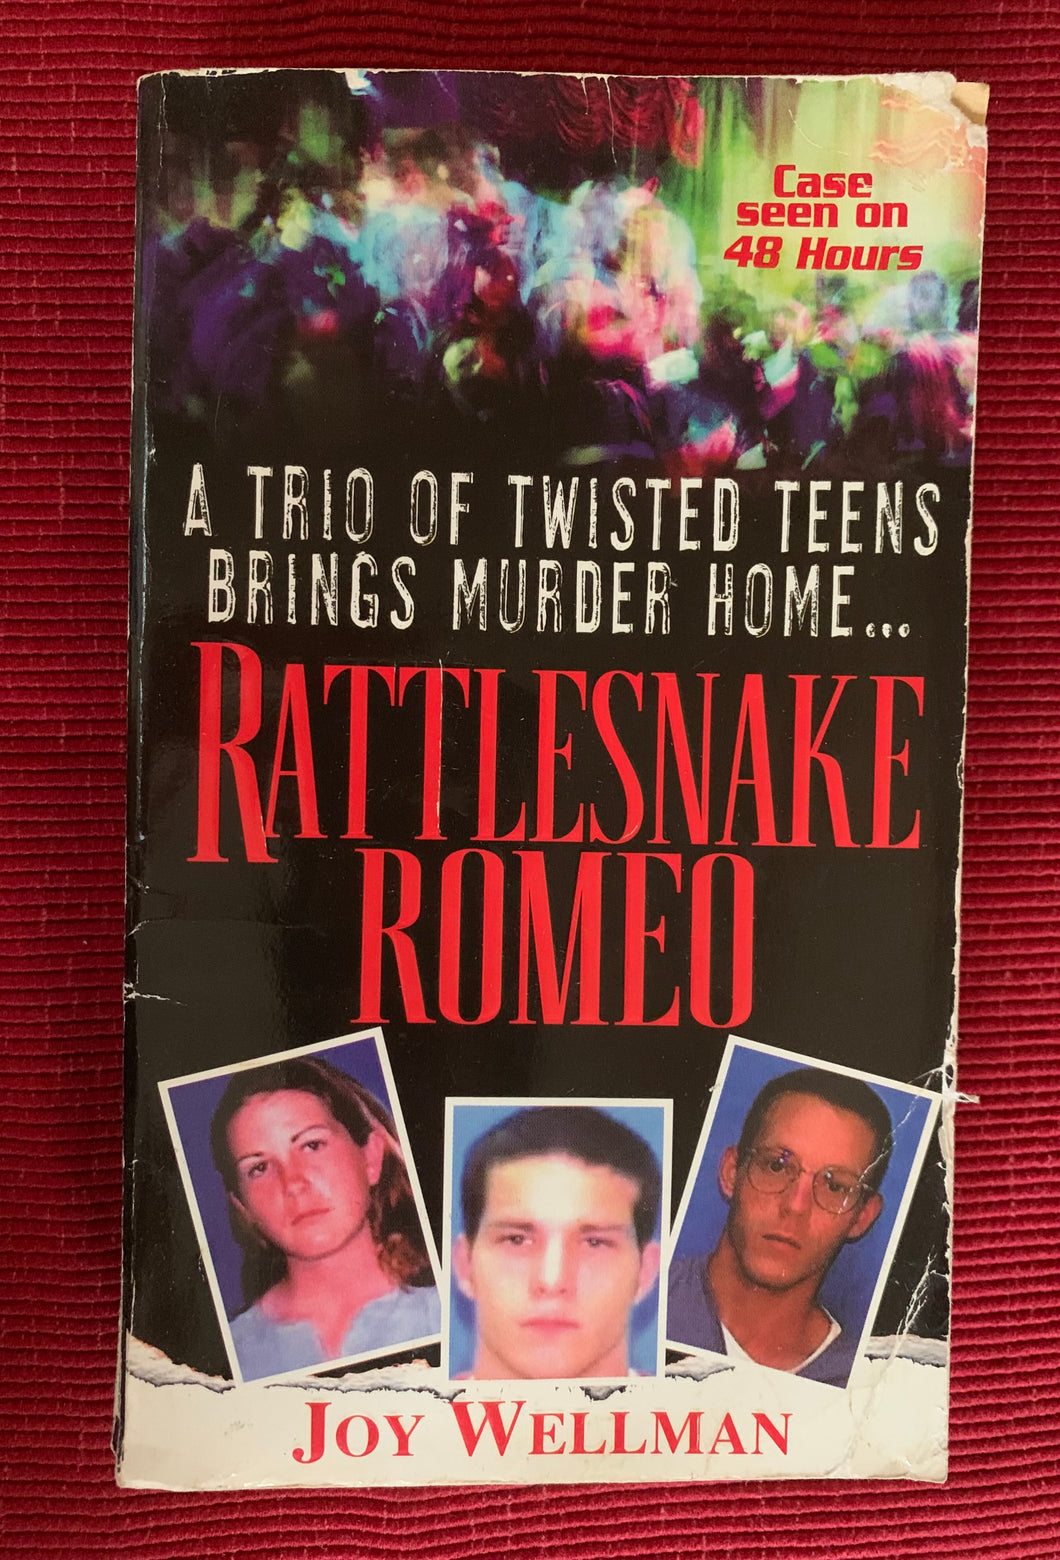 Rattlesnake Romeo: a Trio of Twisted Teens Brings Murder Home...